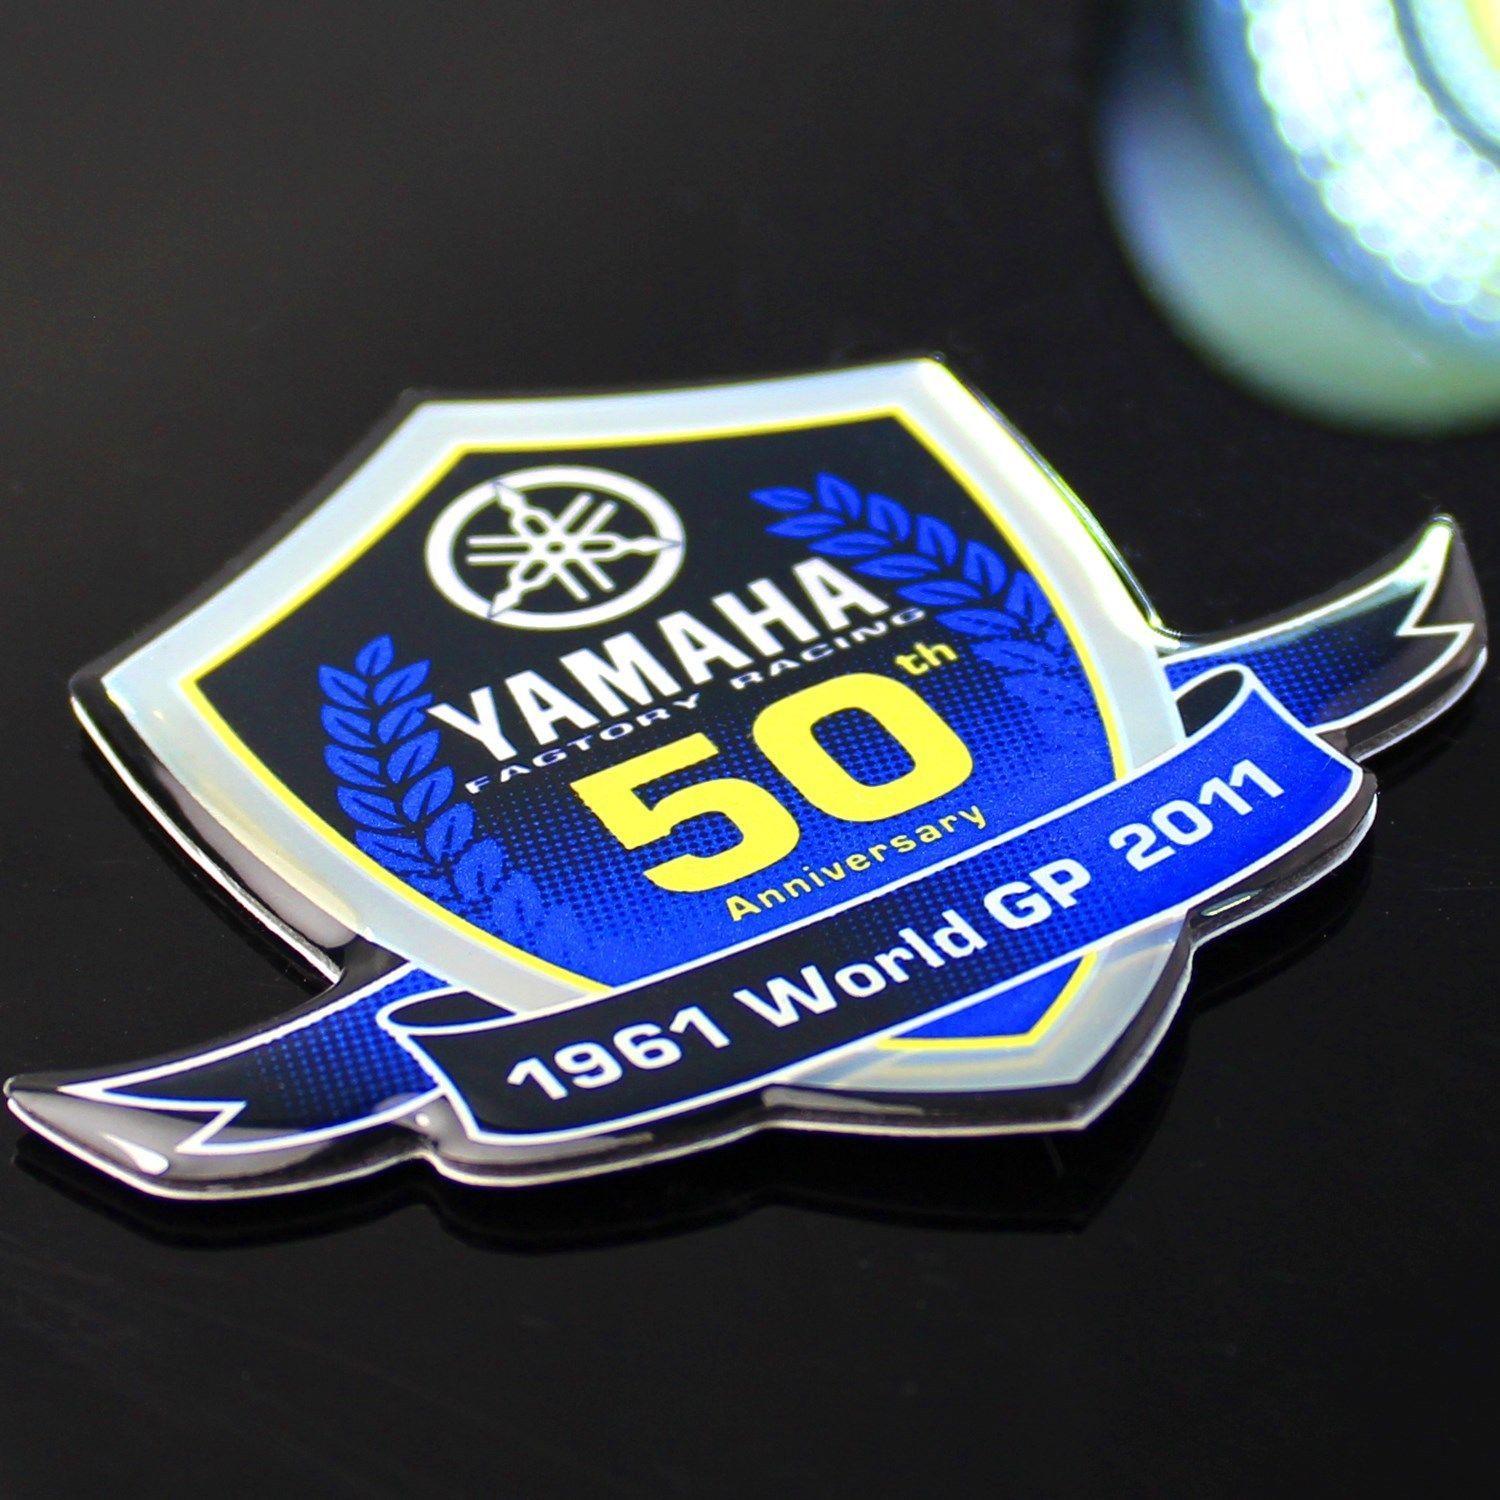 Chrome World Logo - X 3D ABS EMBLEM DECAL LOGO STICKER FOR YAMAHA 50TH ANNIVERSARY